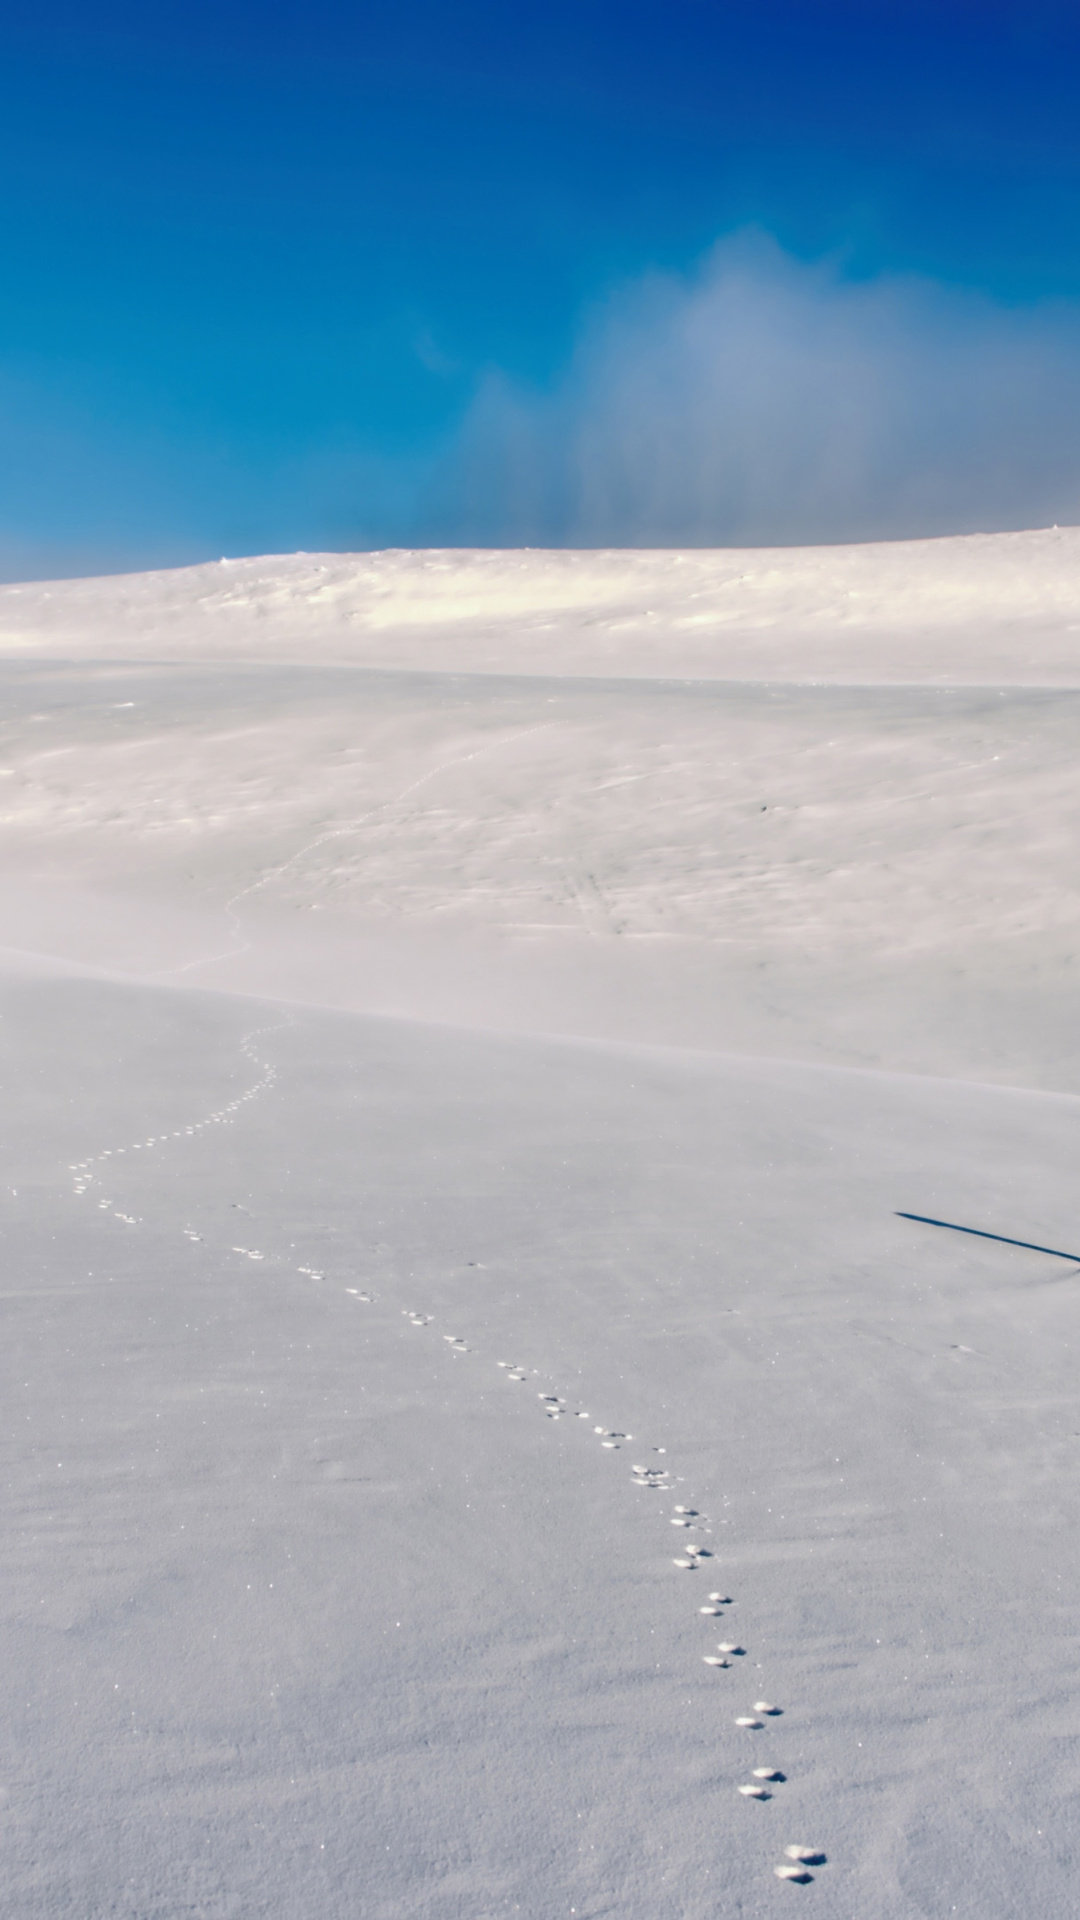 Обои Footprints on snow field 1080x1920